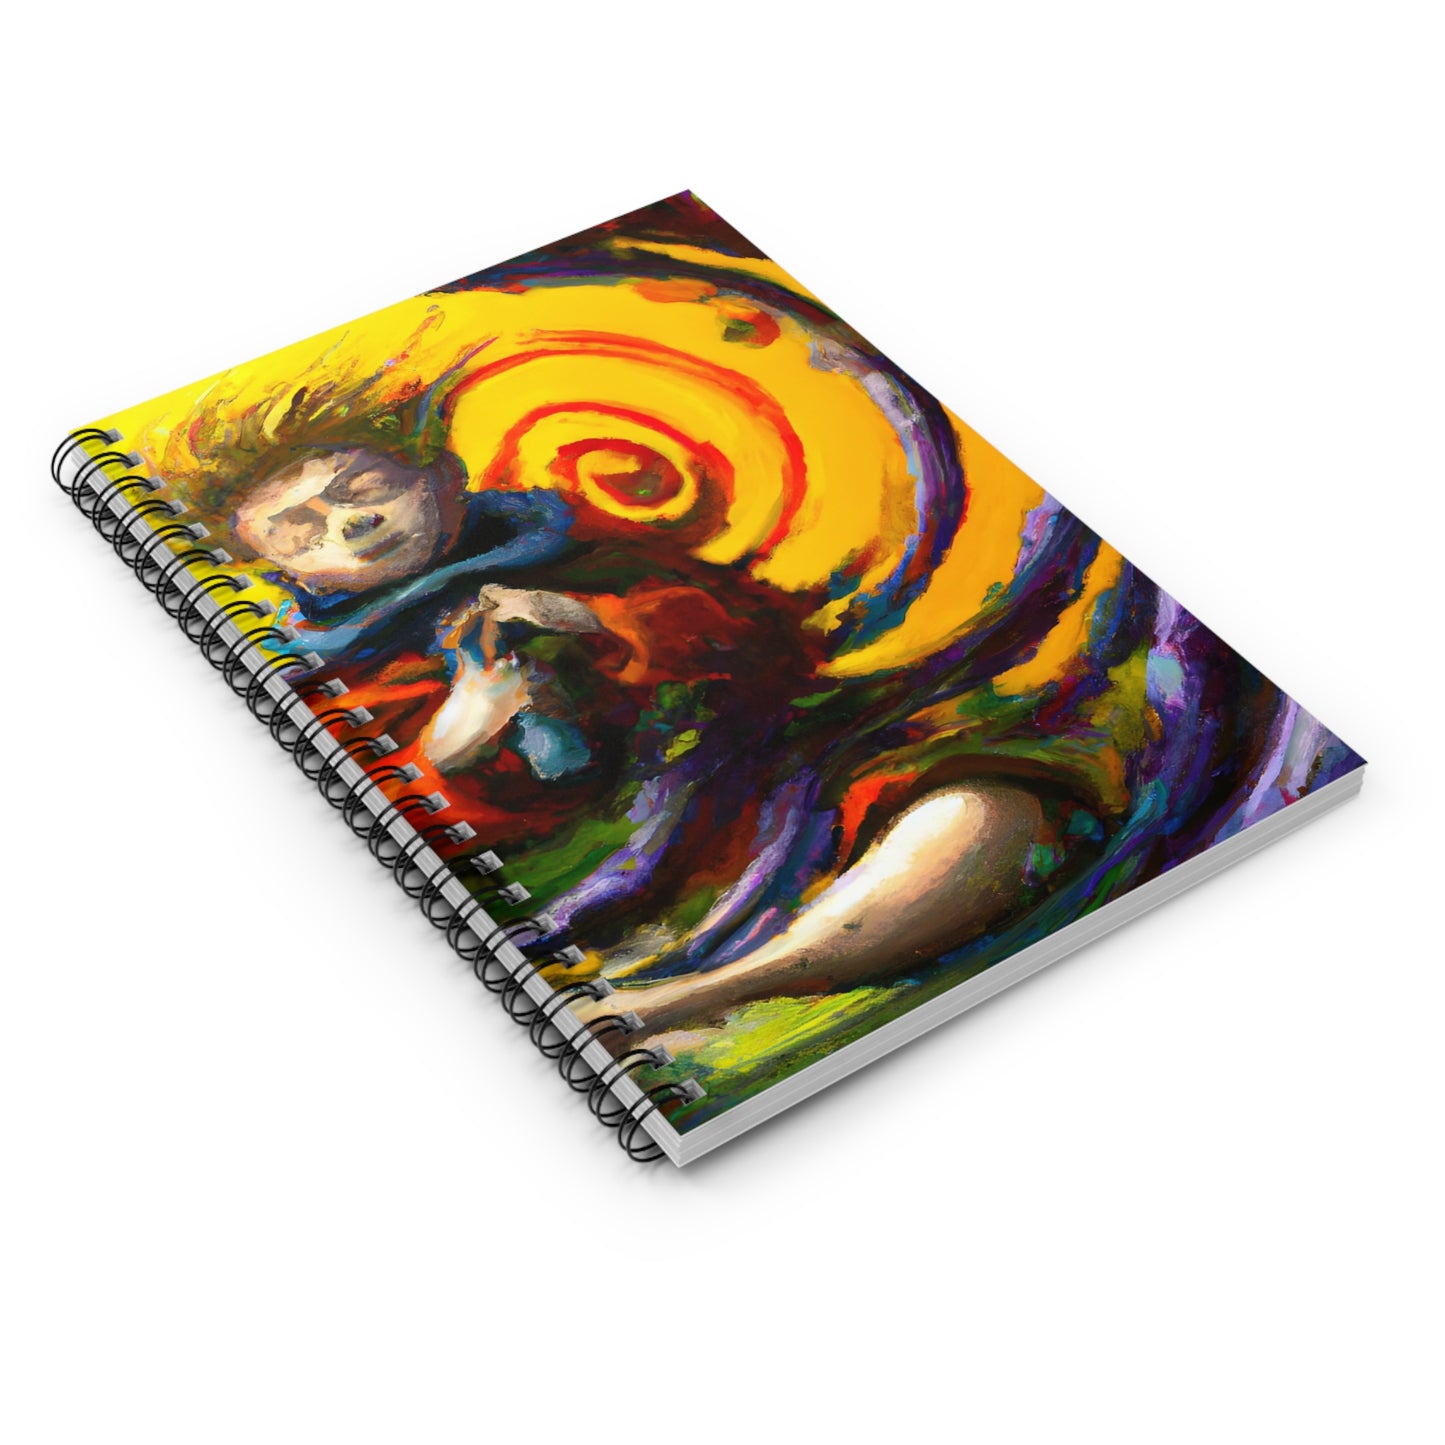 Splashgoo Notebook Journal